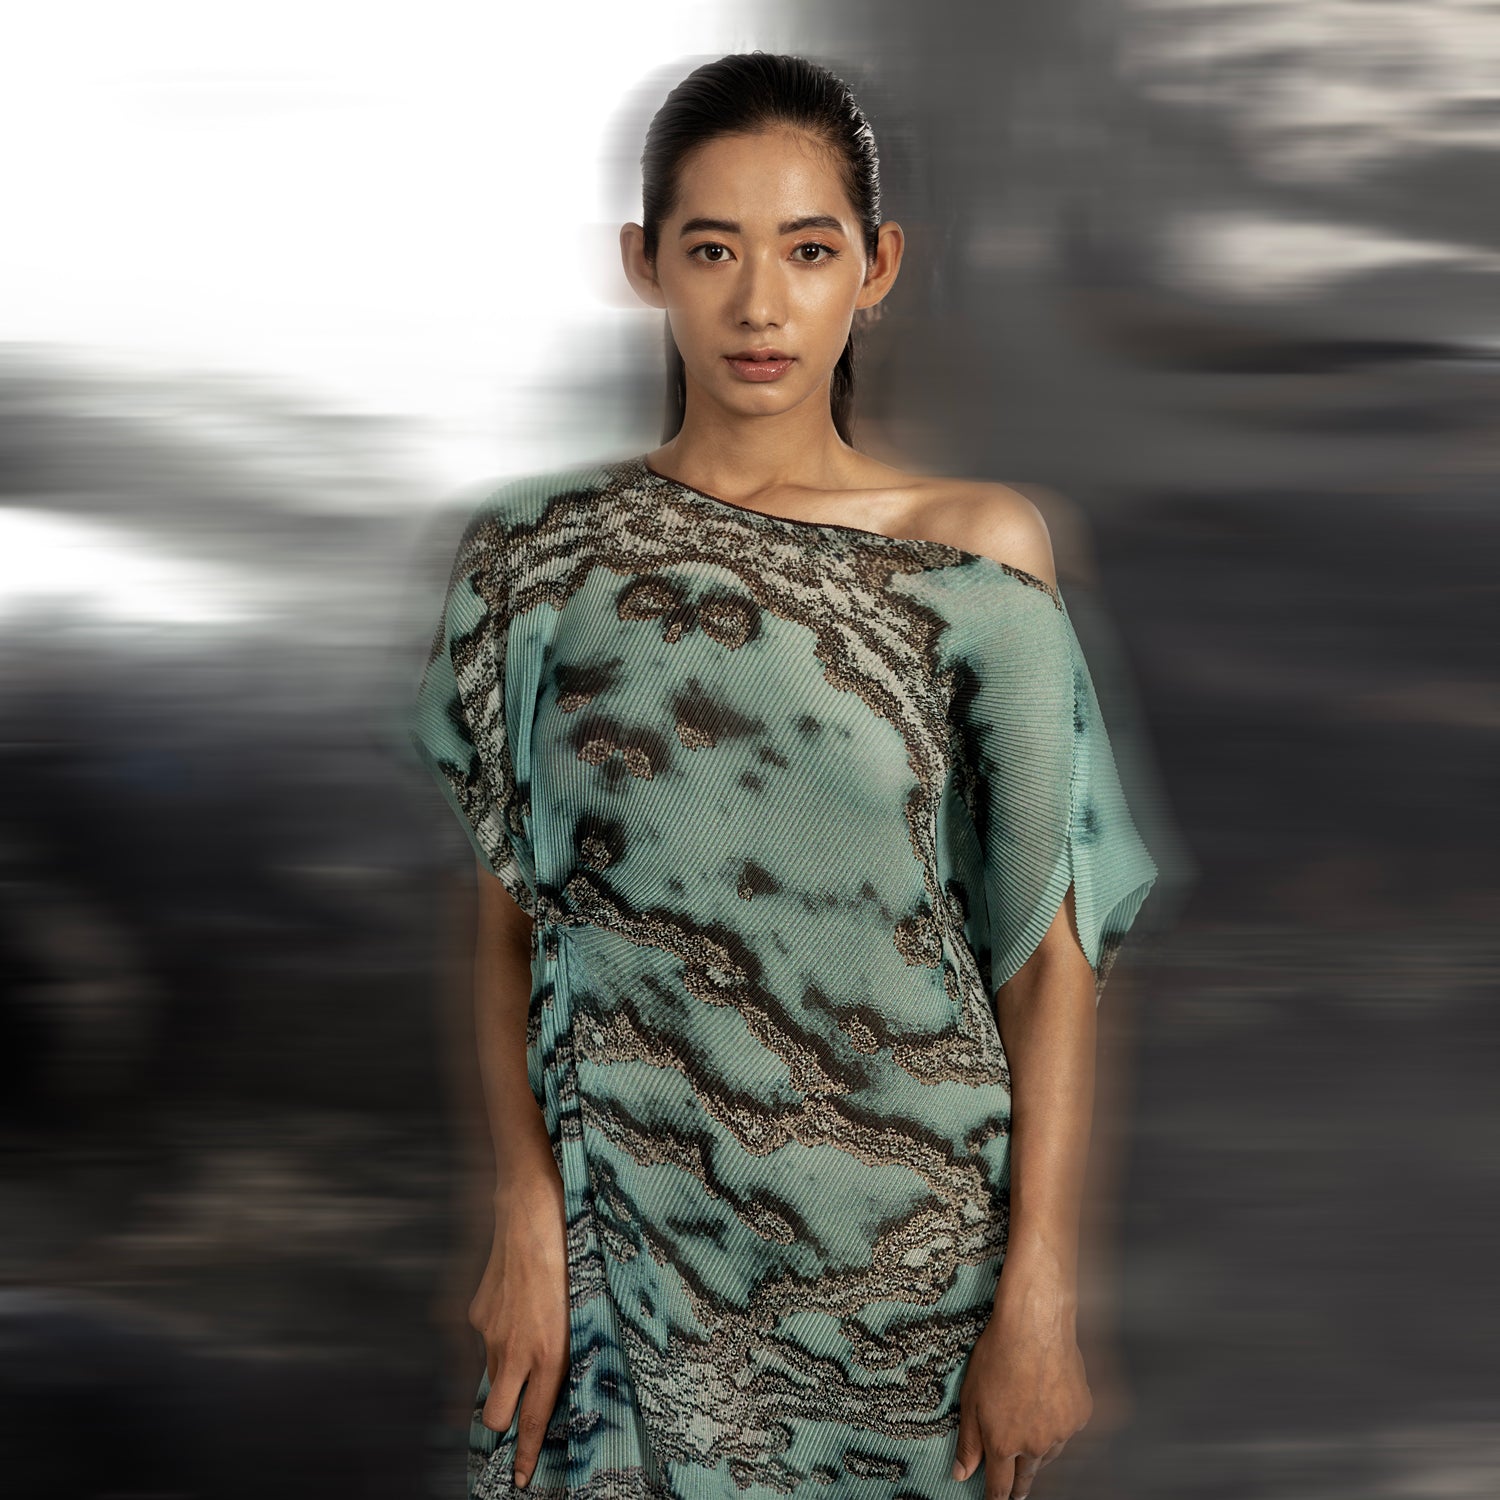 Reef printed and pleated textured drop shoulder asymmetrical draped dress. #abhisheksharma #fashiondesignerabhisheksharma #reef #redcarpet #shortdress #abhishekstudio #lfw #fdci 